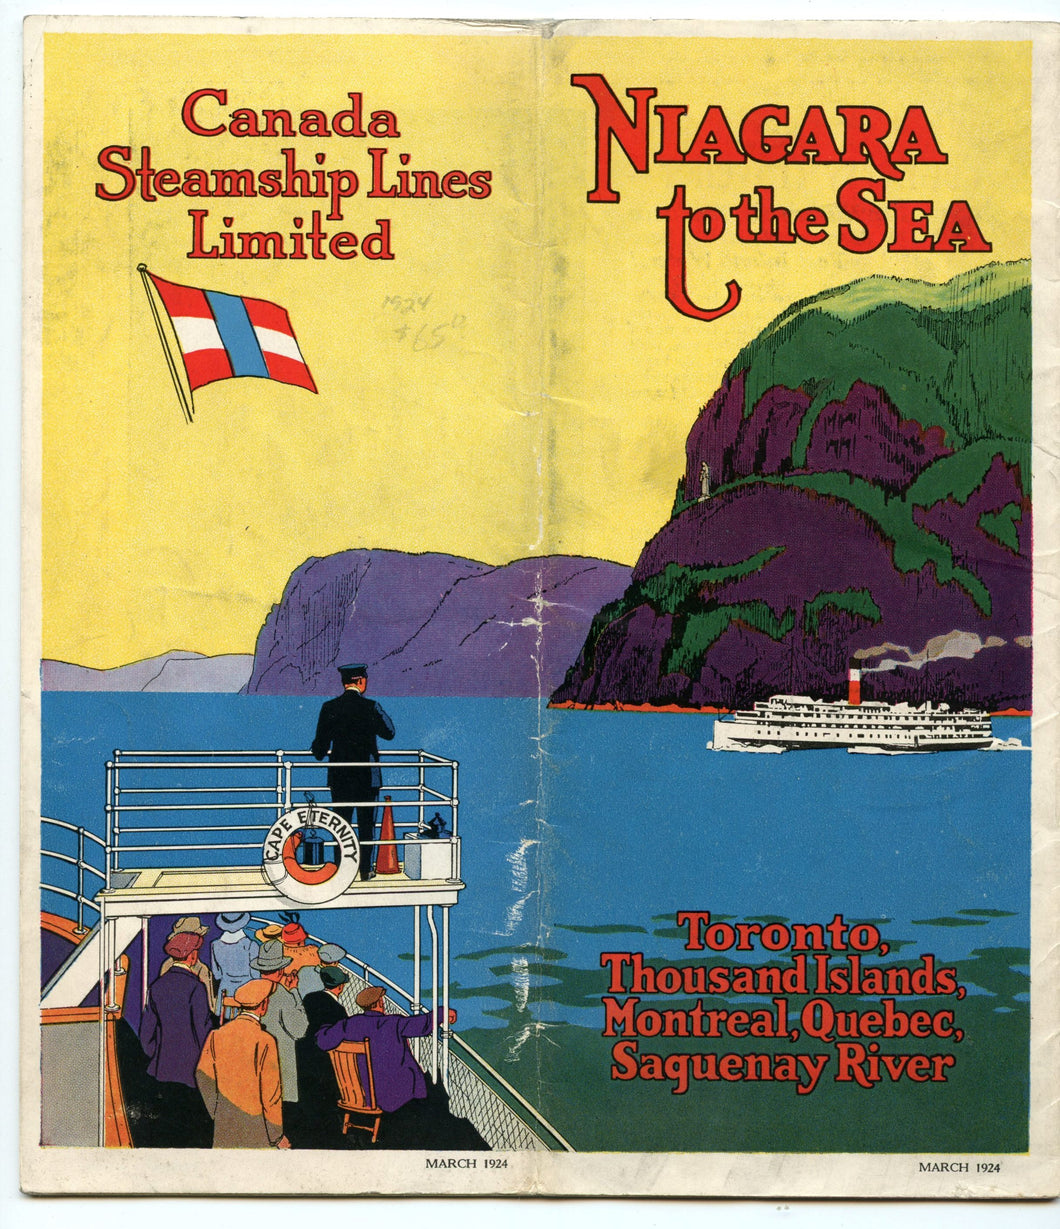 Canada Steamship Lines Niagara to the Sea flyer